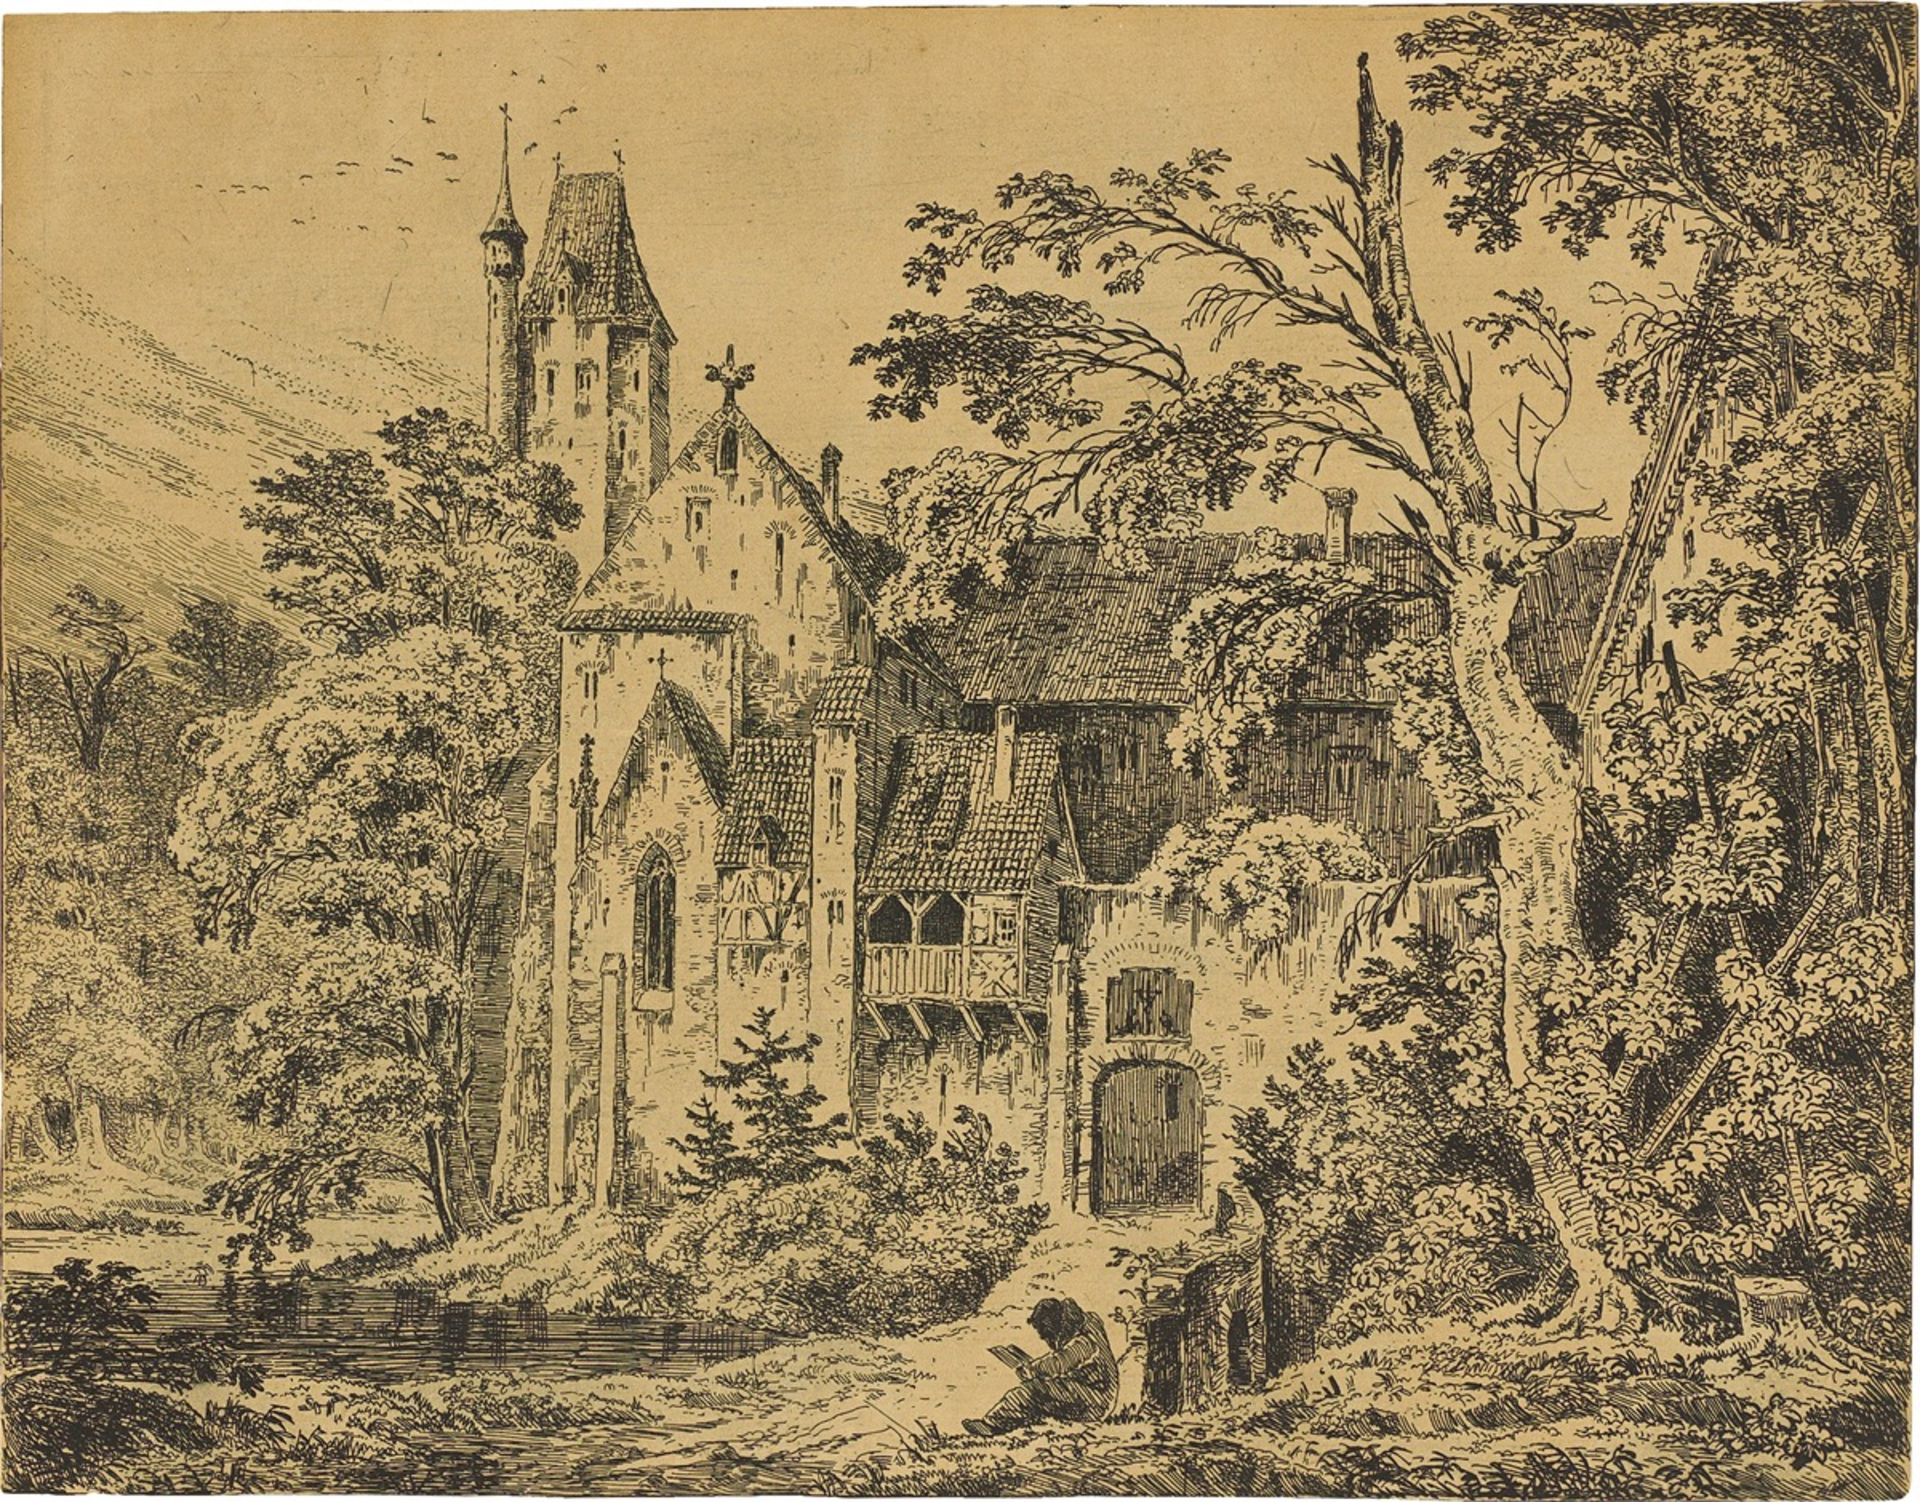 Carl Blechen. ”Kloster im Walde”. 1823